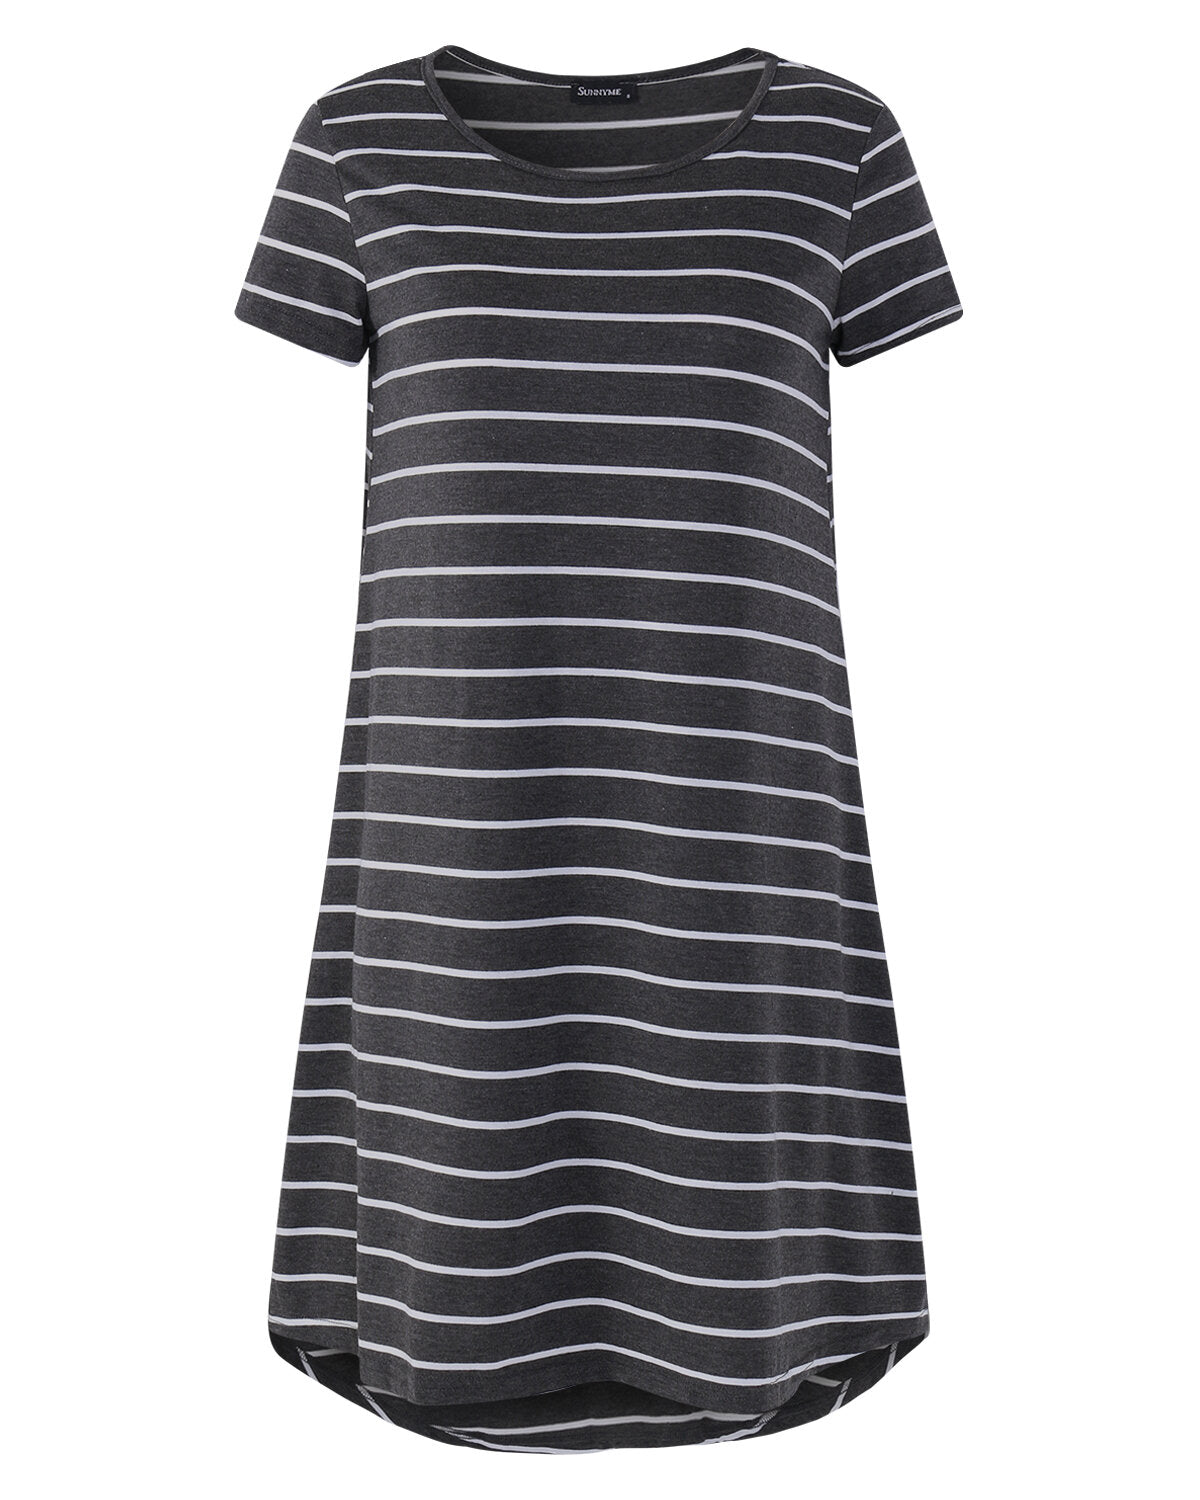 Striped O-neck Short Sleeve Casual Summer Mini Shirt Dress